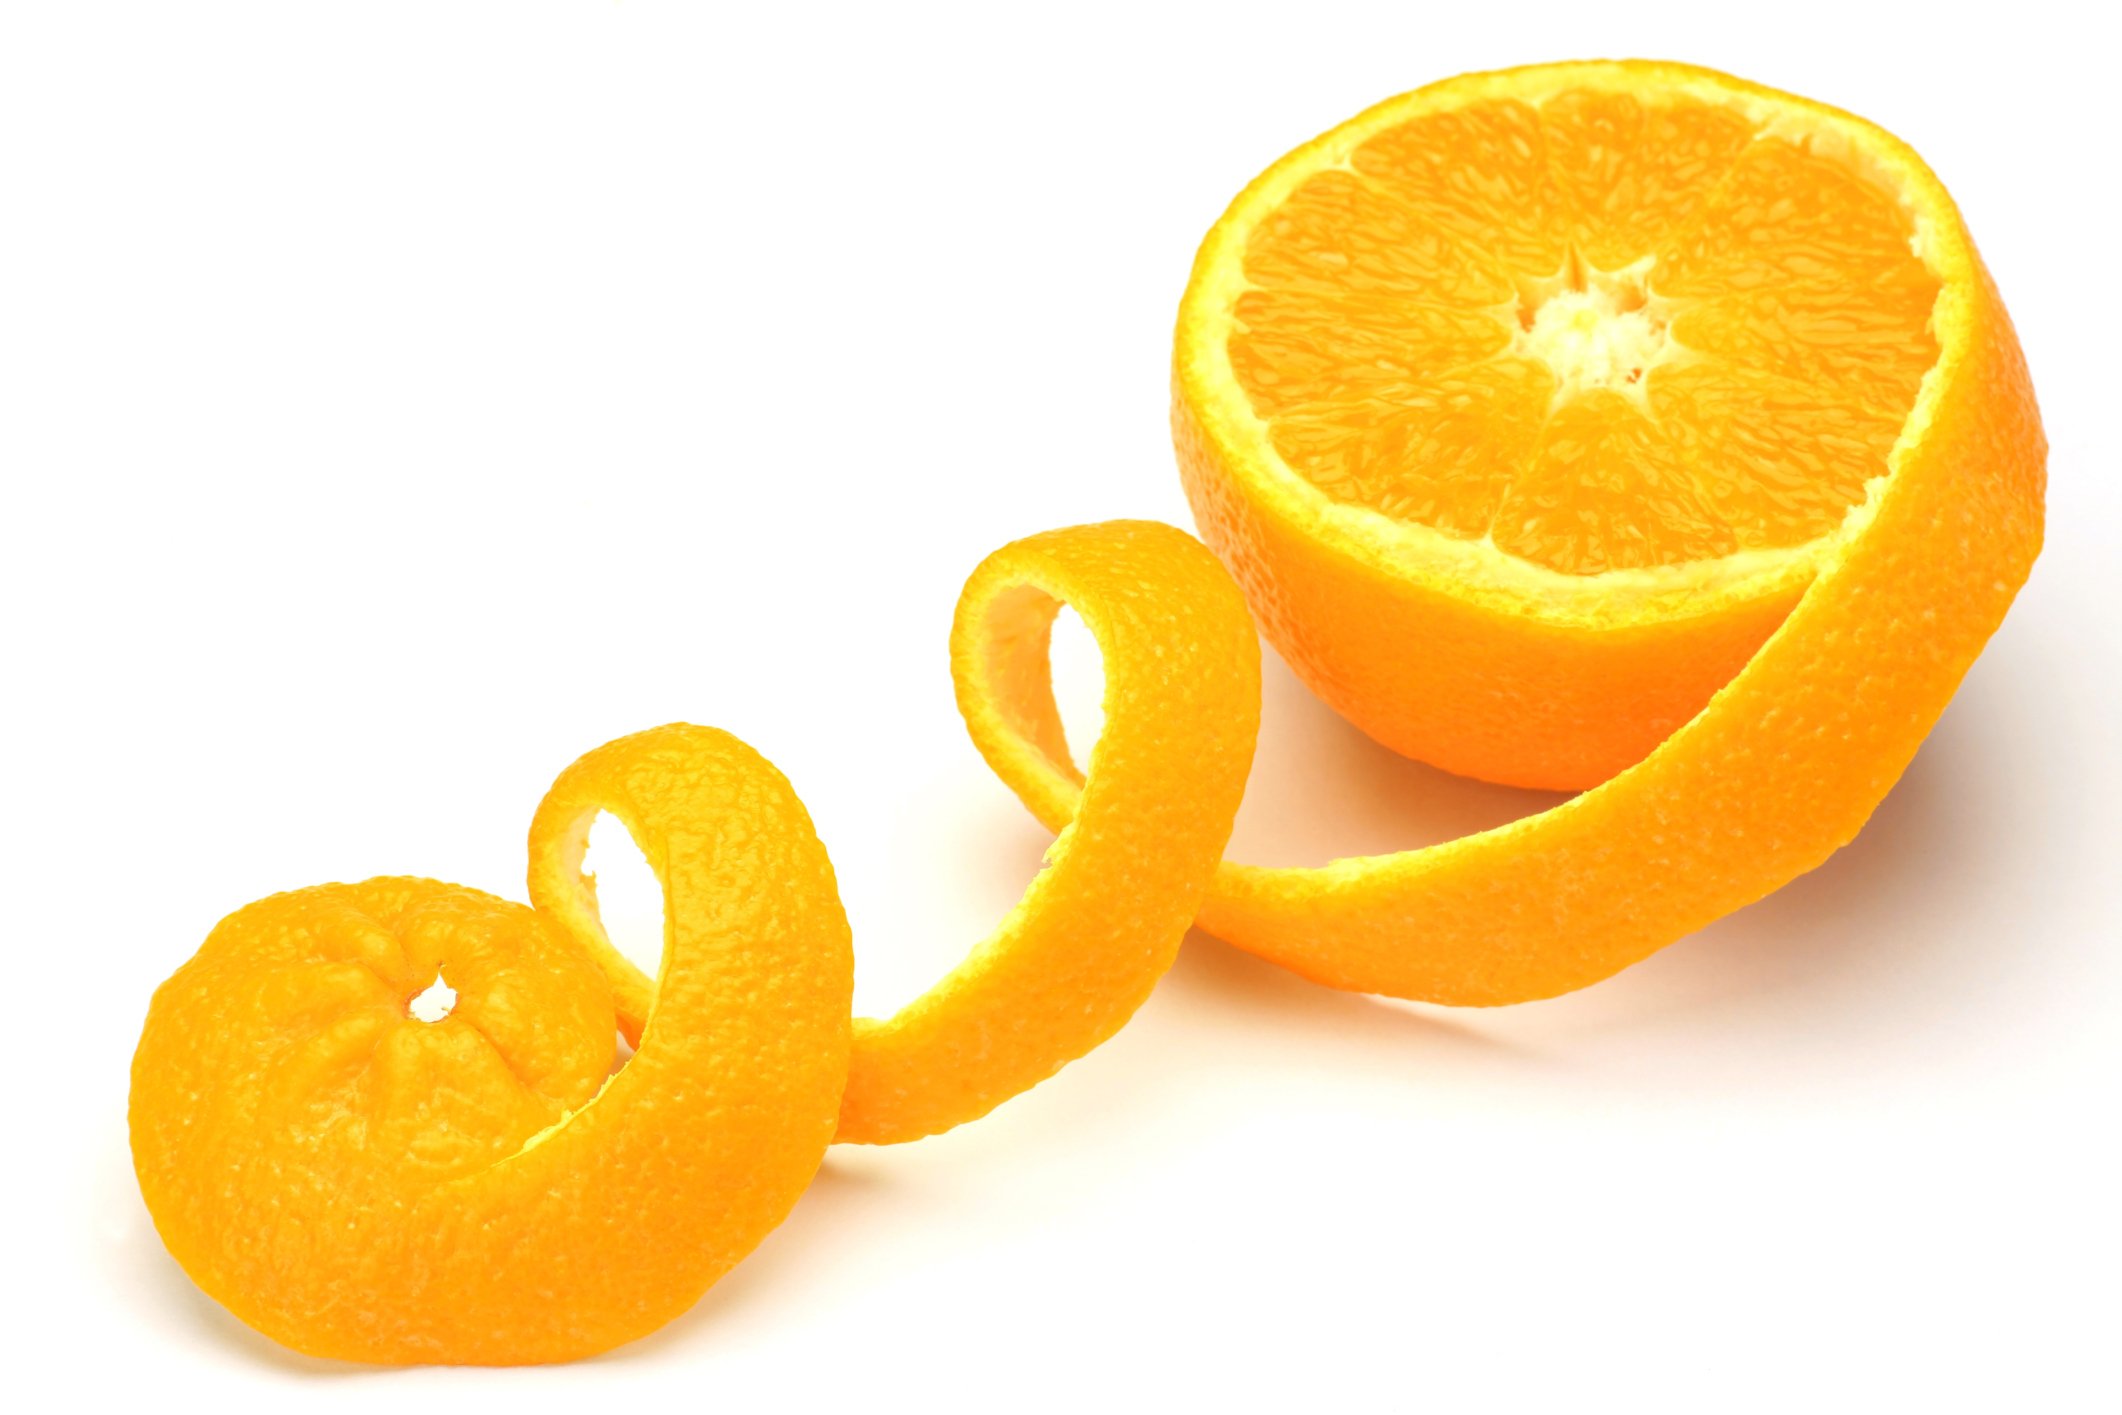 Image result for orange peel